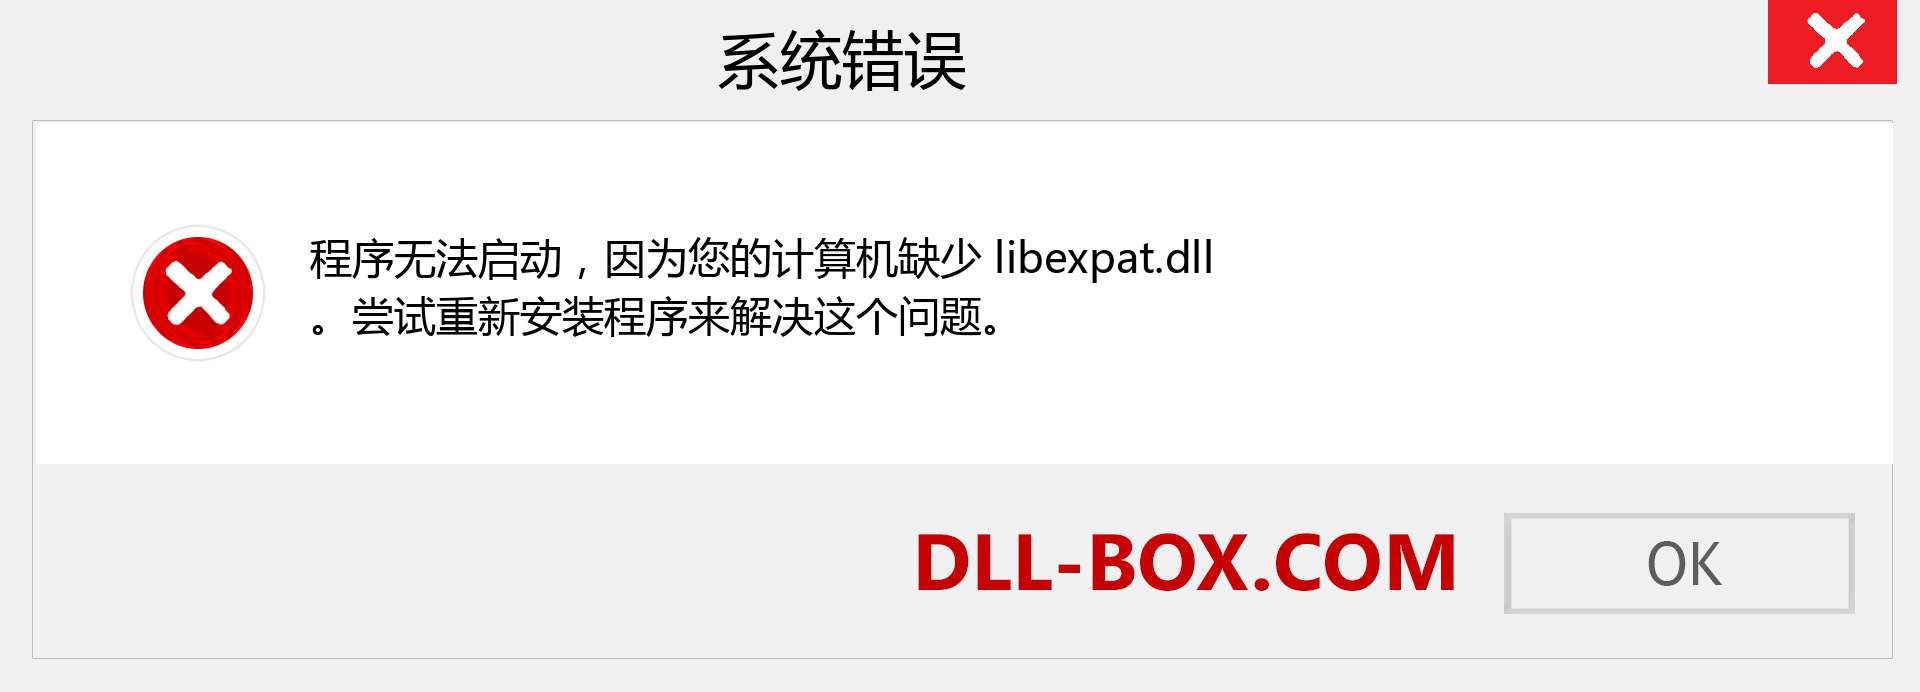 libexpat.dll 文件丢失？。 适用于 Windows 7、8、10 的下载 - 修复 Windows、照片、图像上的 libexpat dll 丢失错误